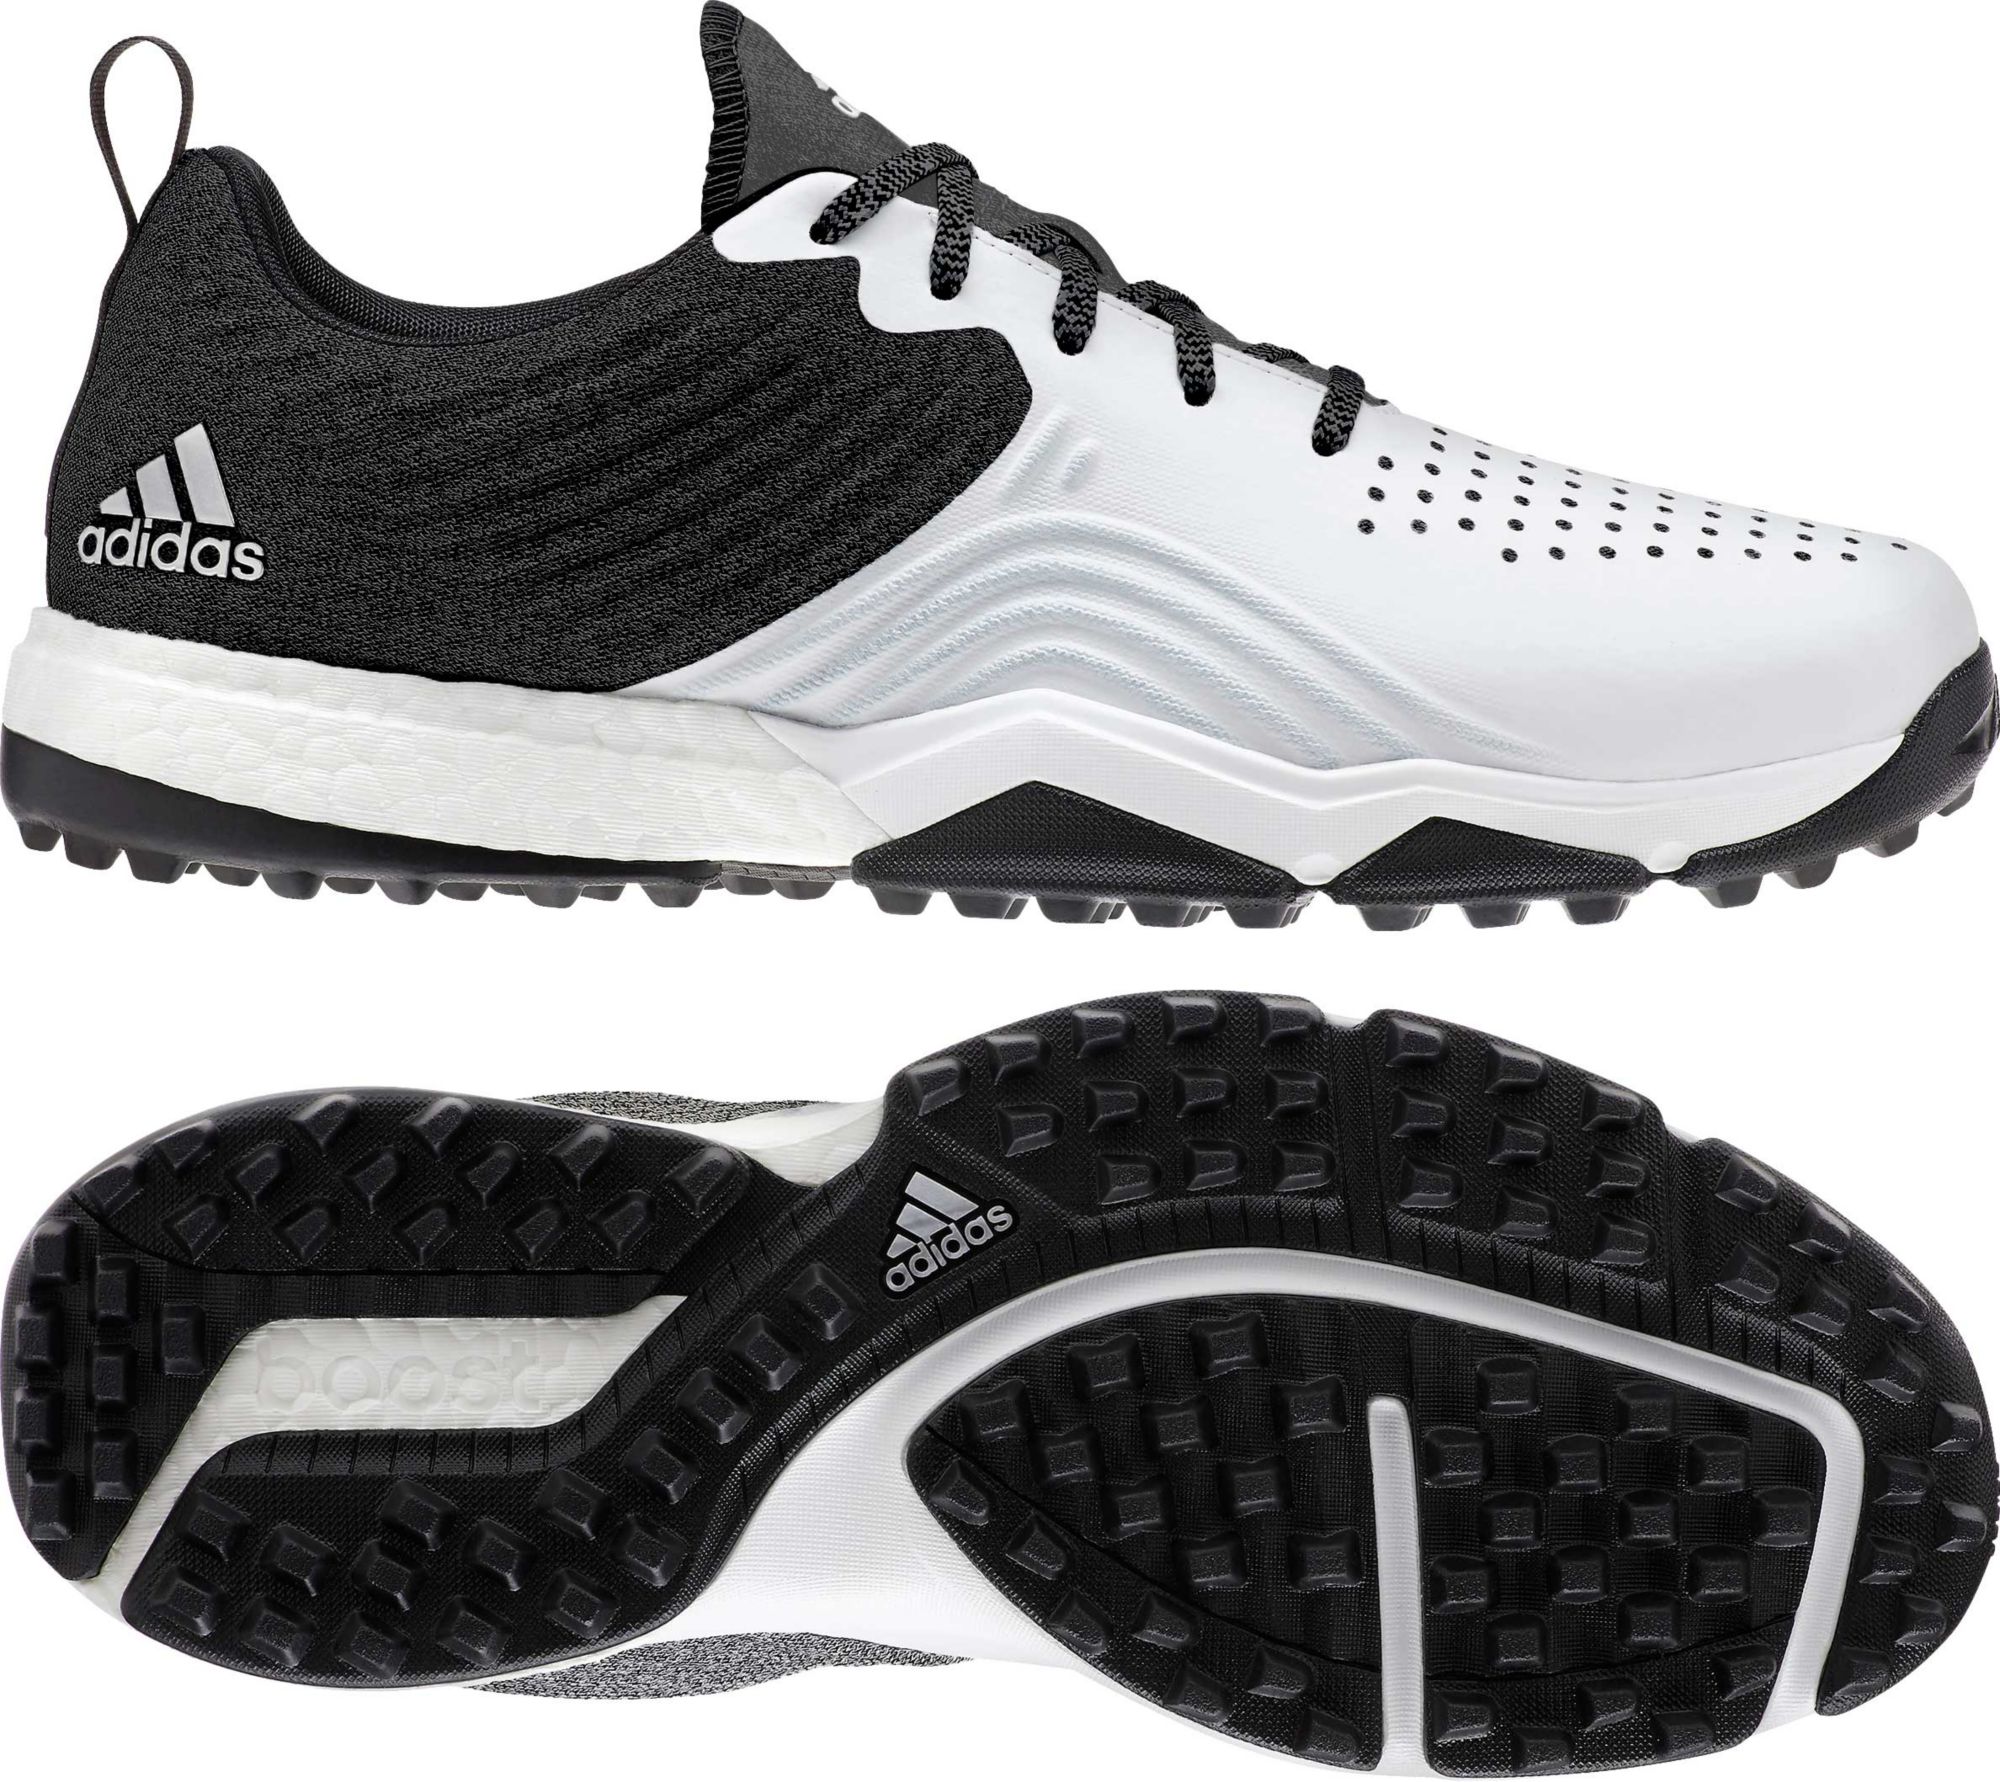 adidas men's adipower 4orged s golf shoe